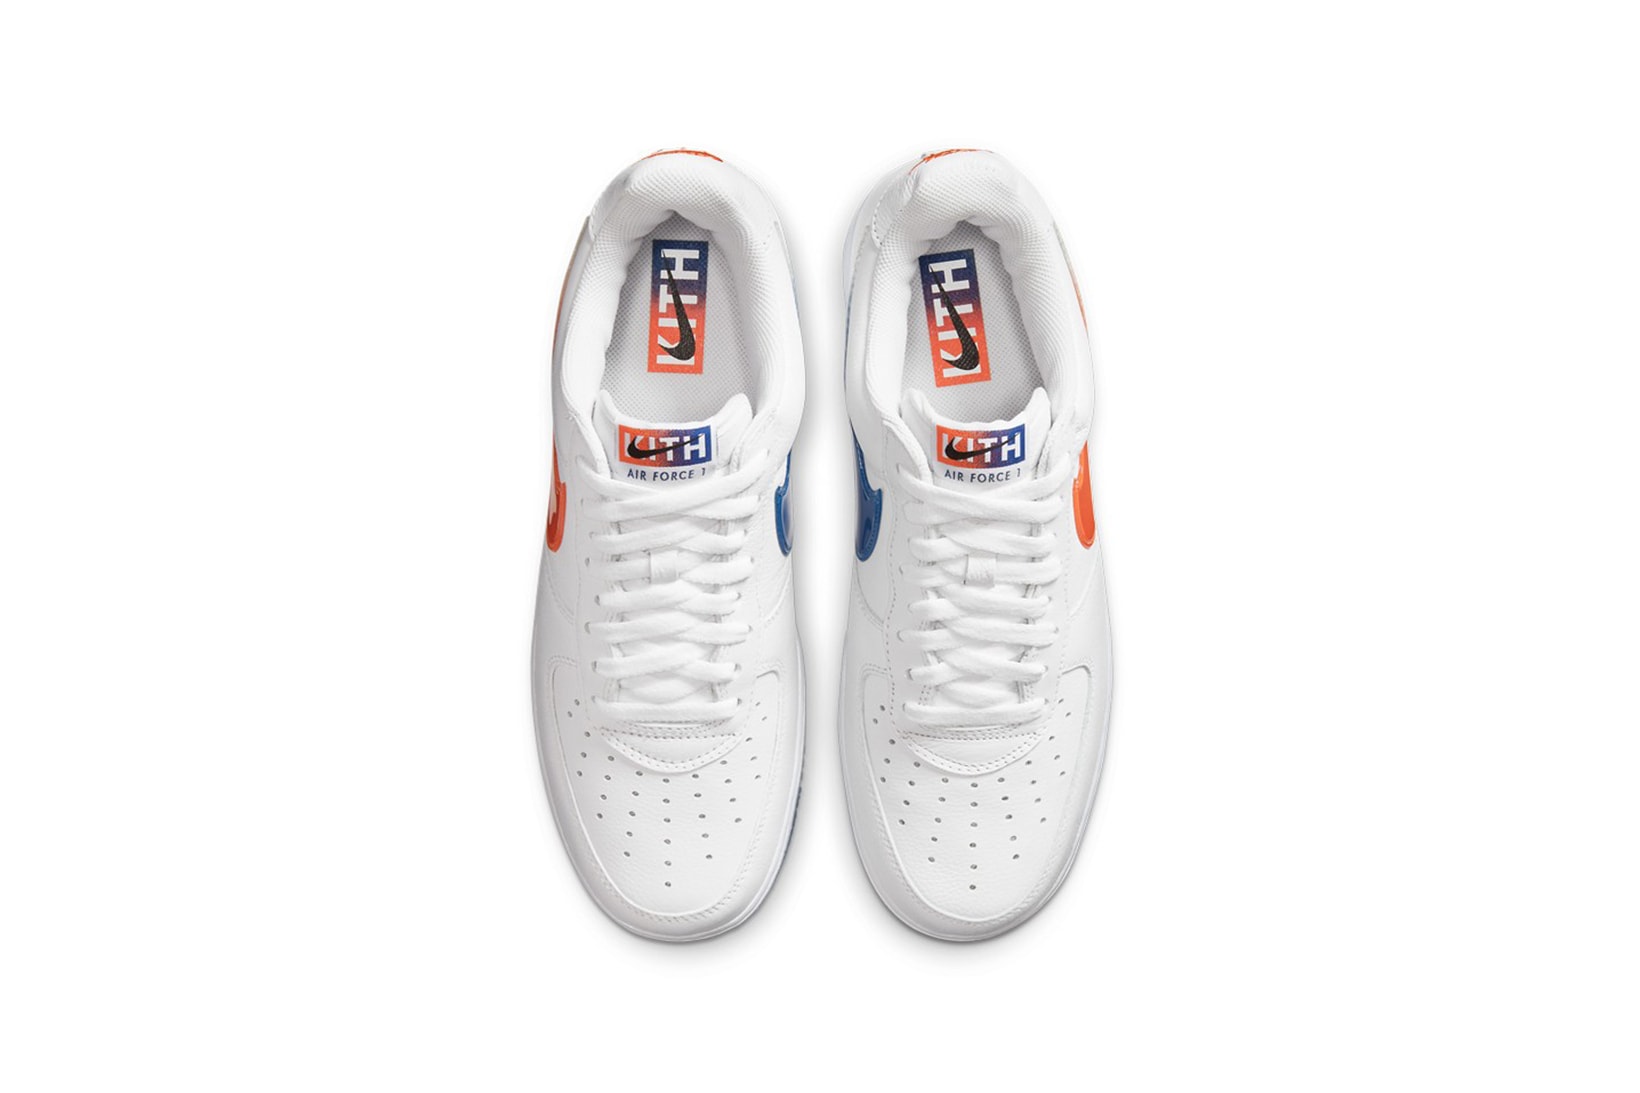 kith nike collaboration air force 1 low sneakers white orange blue shoes footwear sneakerhead ronnie fieg